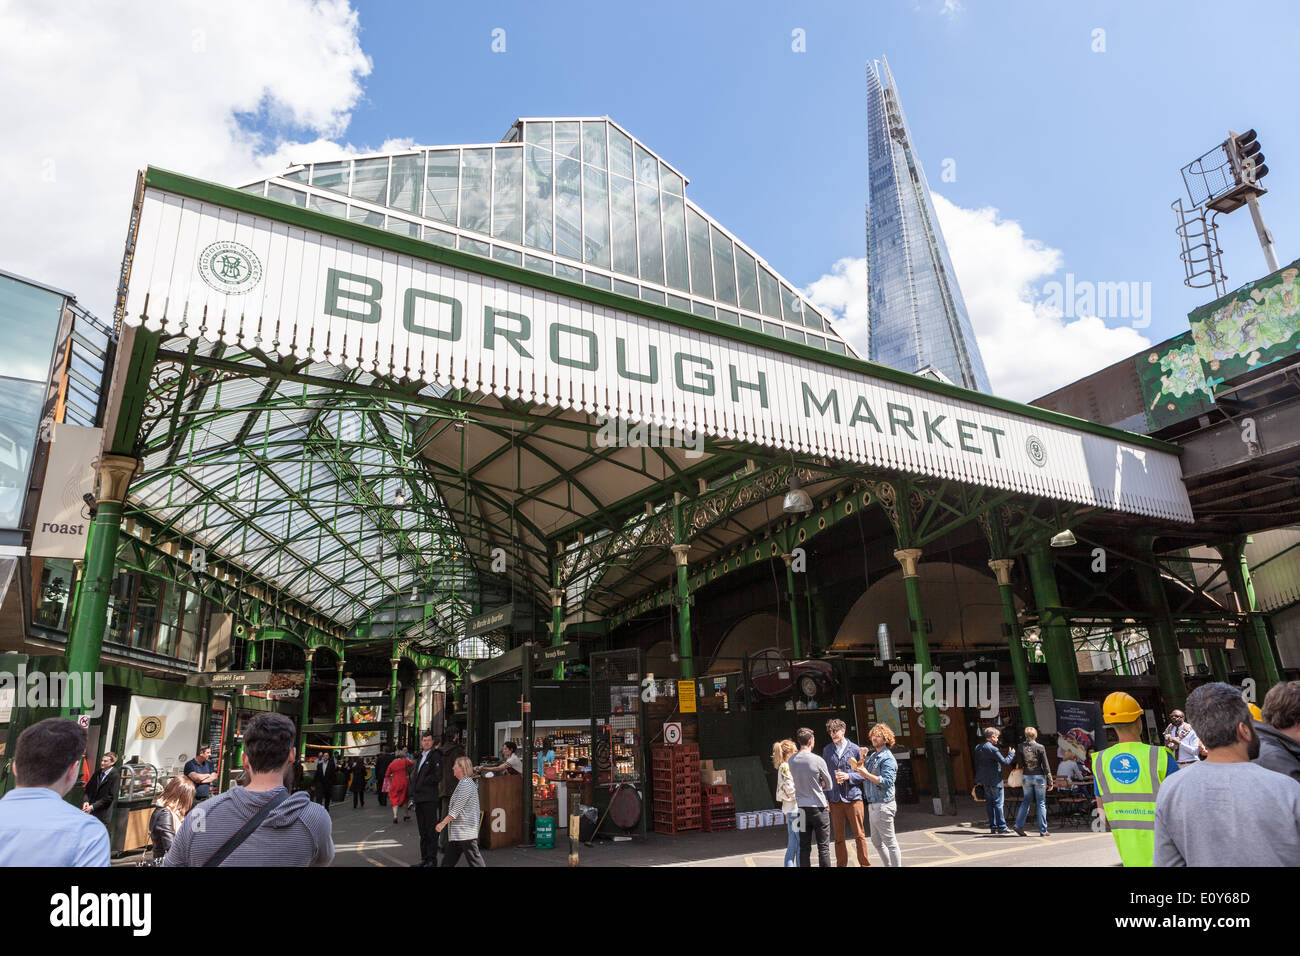 Entrance to Borough Market, near London Bridge. Stock Photo